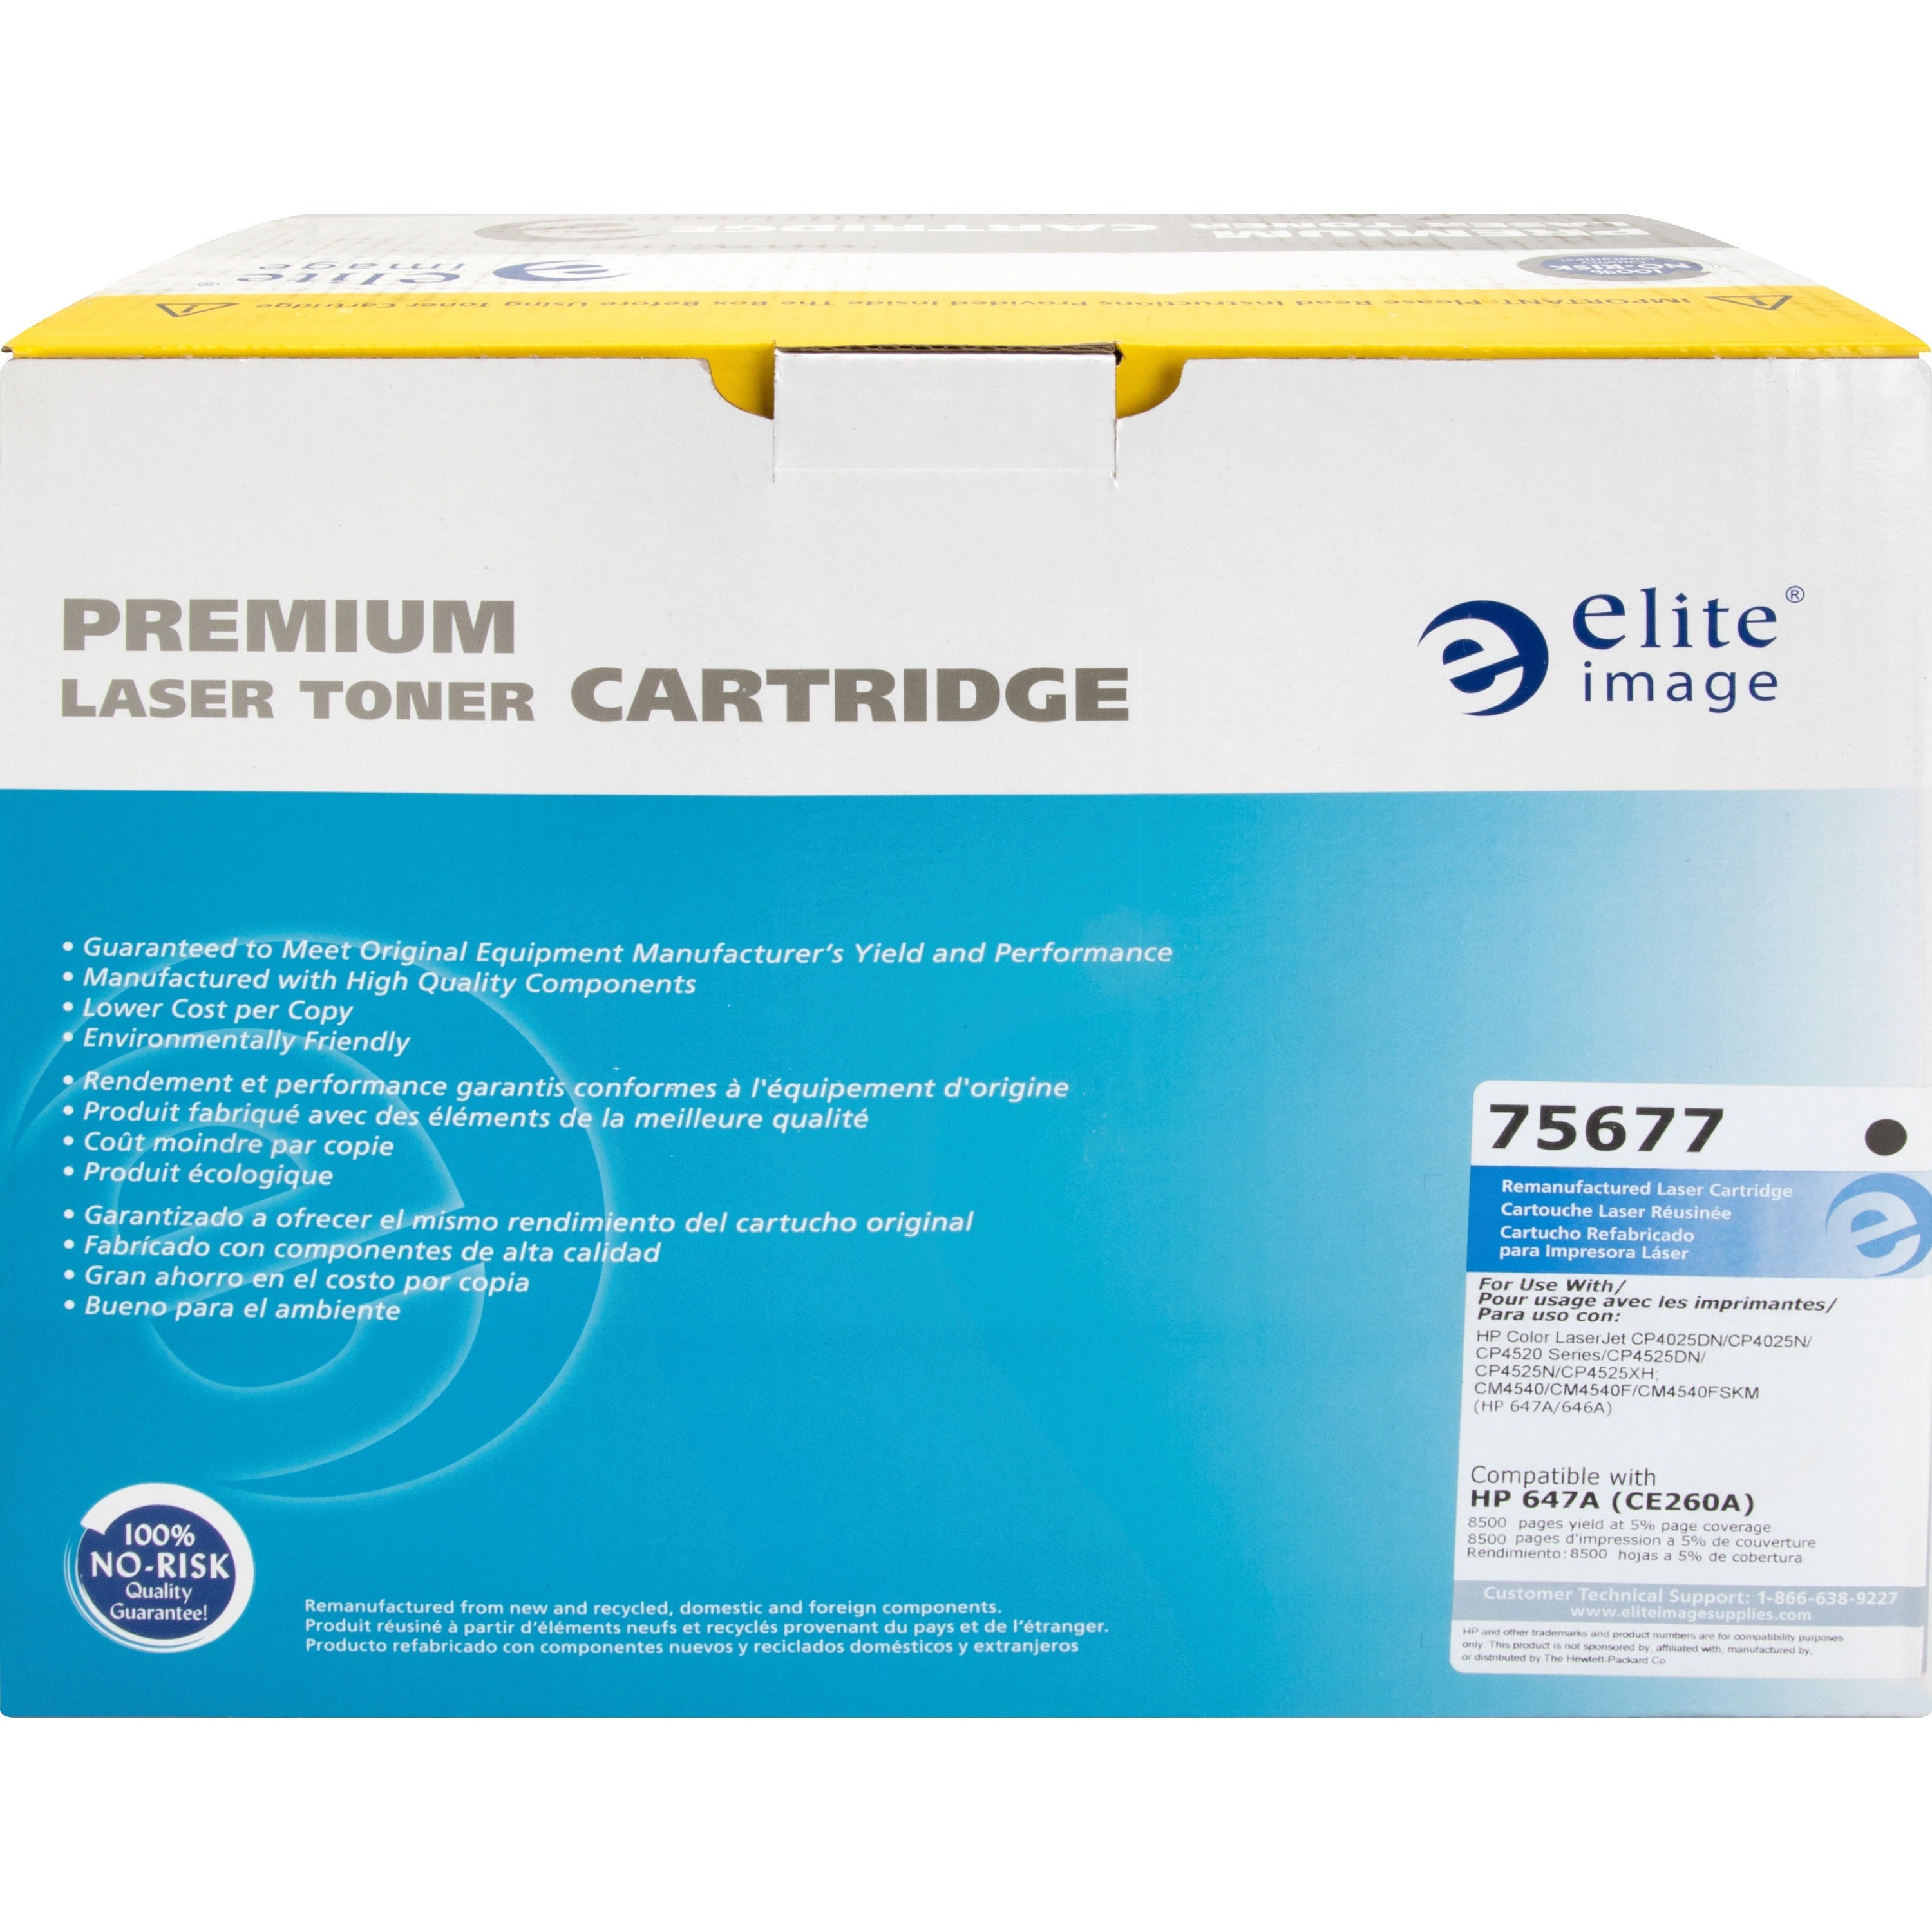 Elite Image Remanufactured Laser Toner Cartridge - Alternative for HP 647A (CE260A) - Black - 1 Each - 8500 Pages - 2